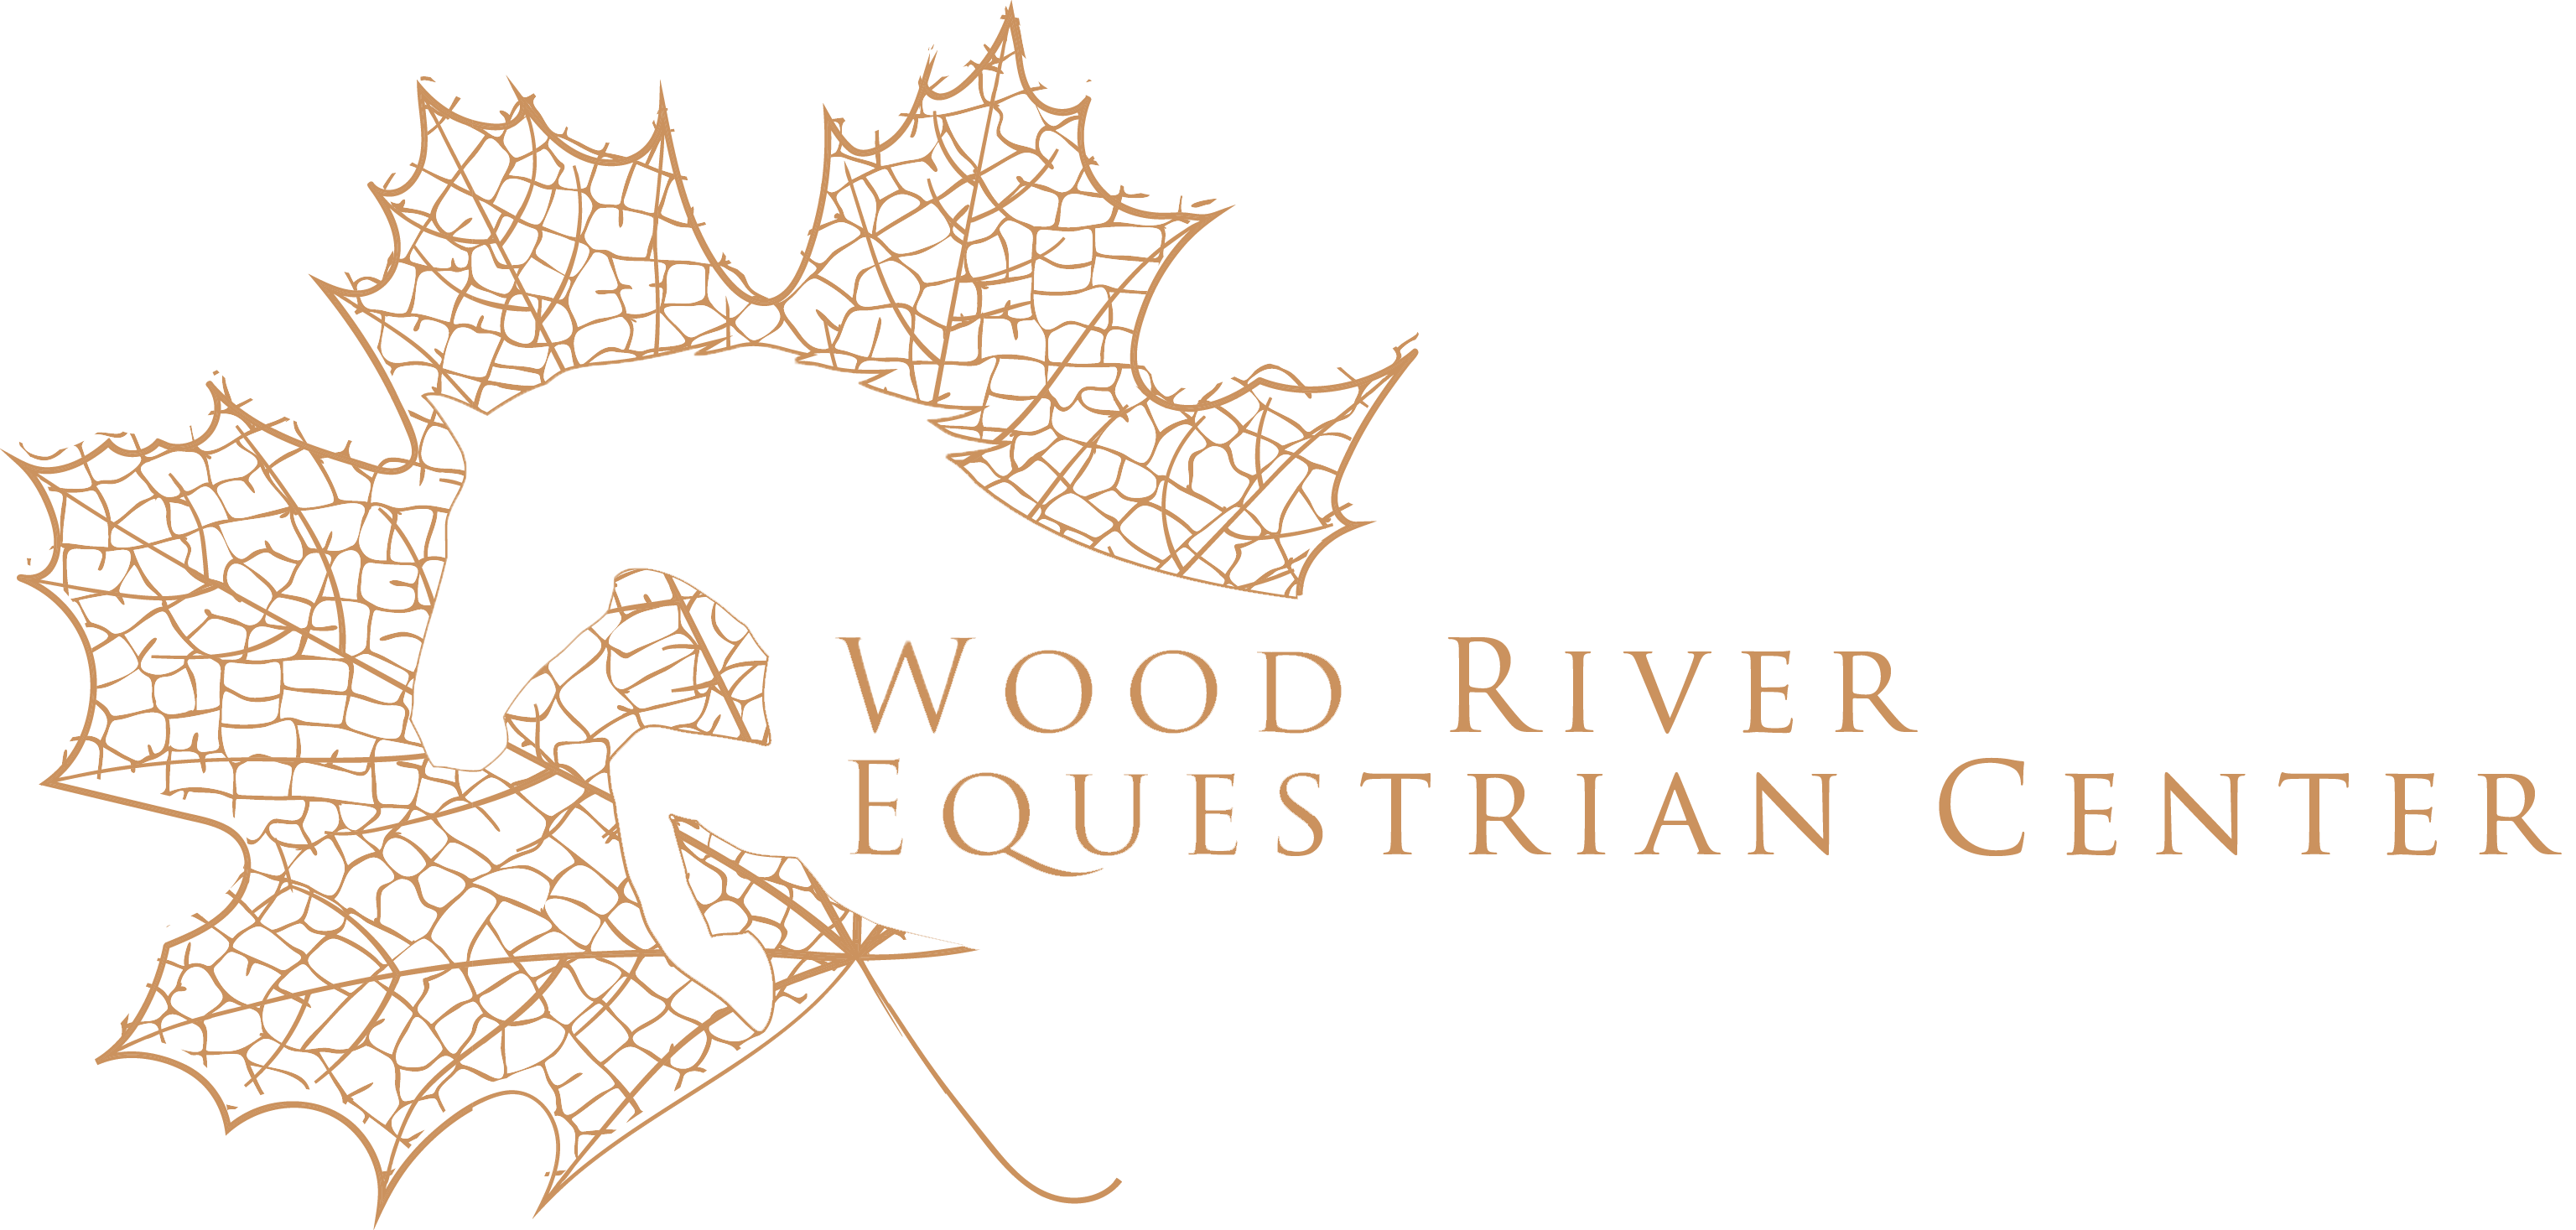 Wood River Equestrian Center